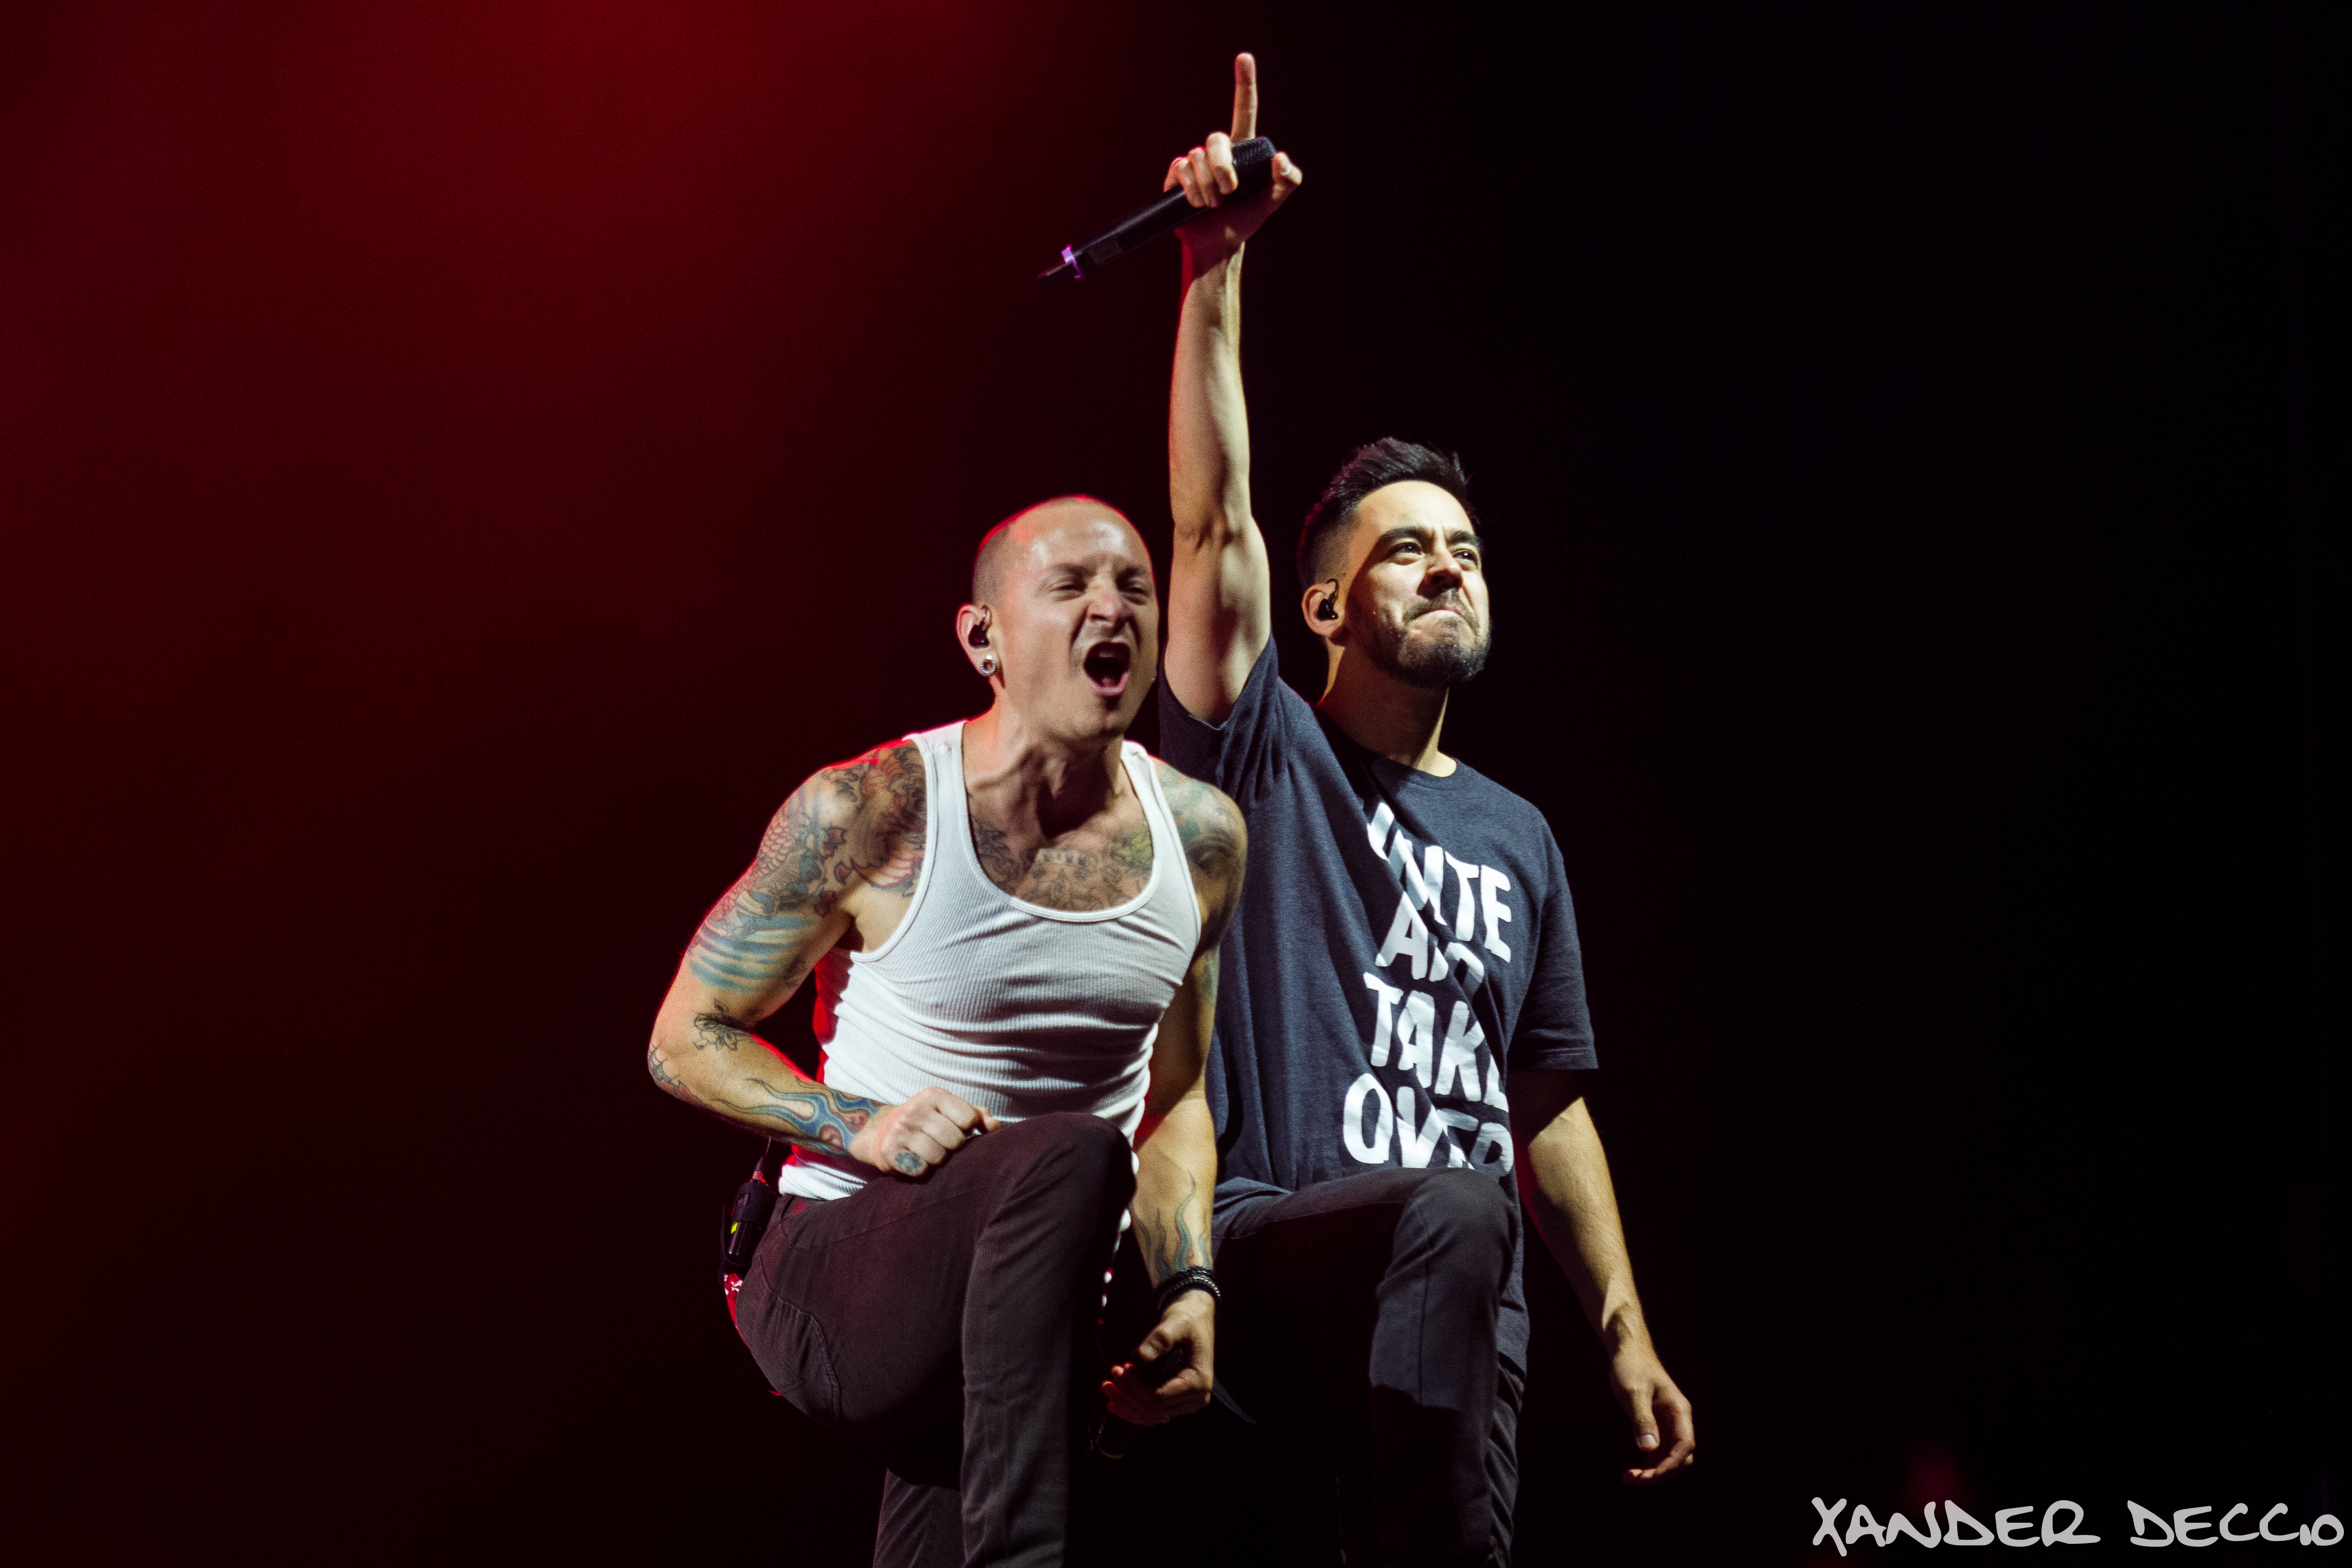 Linkin Park @ The Gorge Amphitheater (Photo By Xander Deccio)